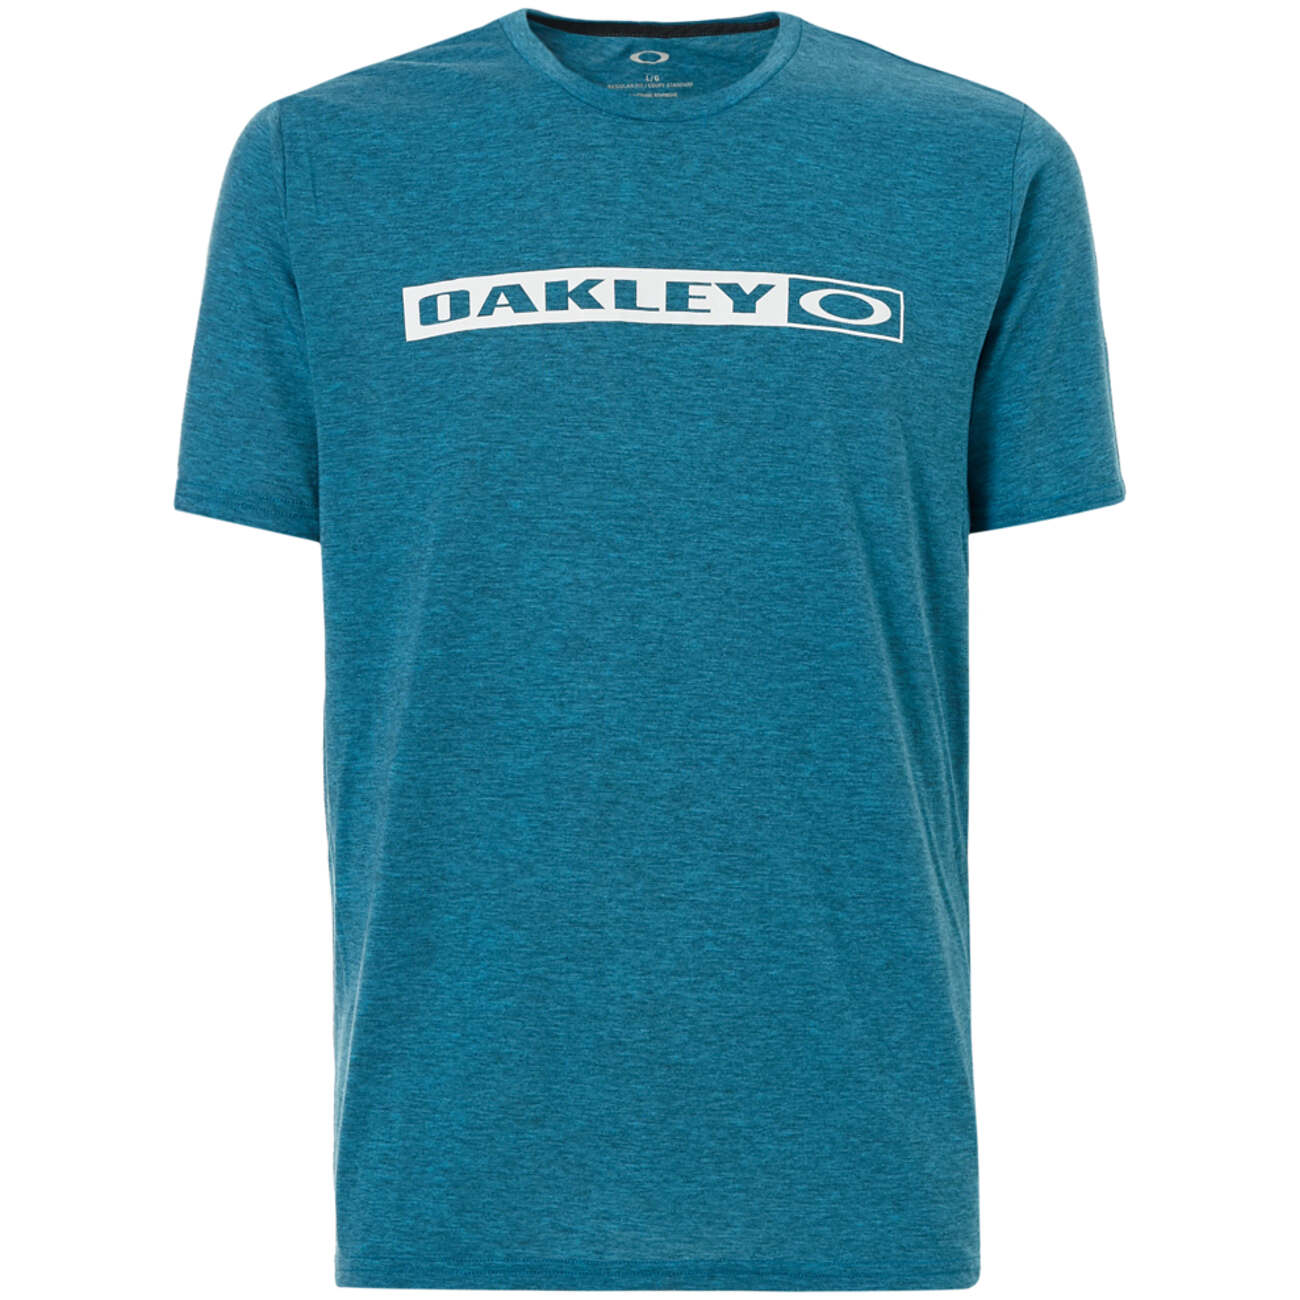 Oakley T-Shirt New Original Atomic Blue Dark Heather